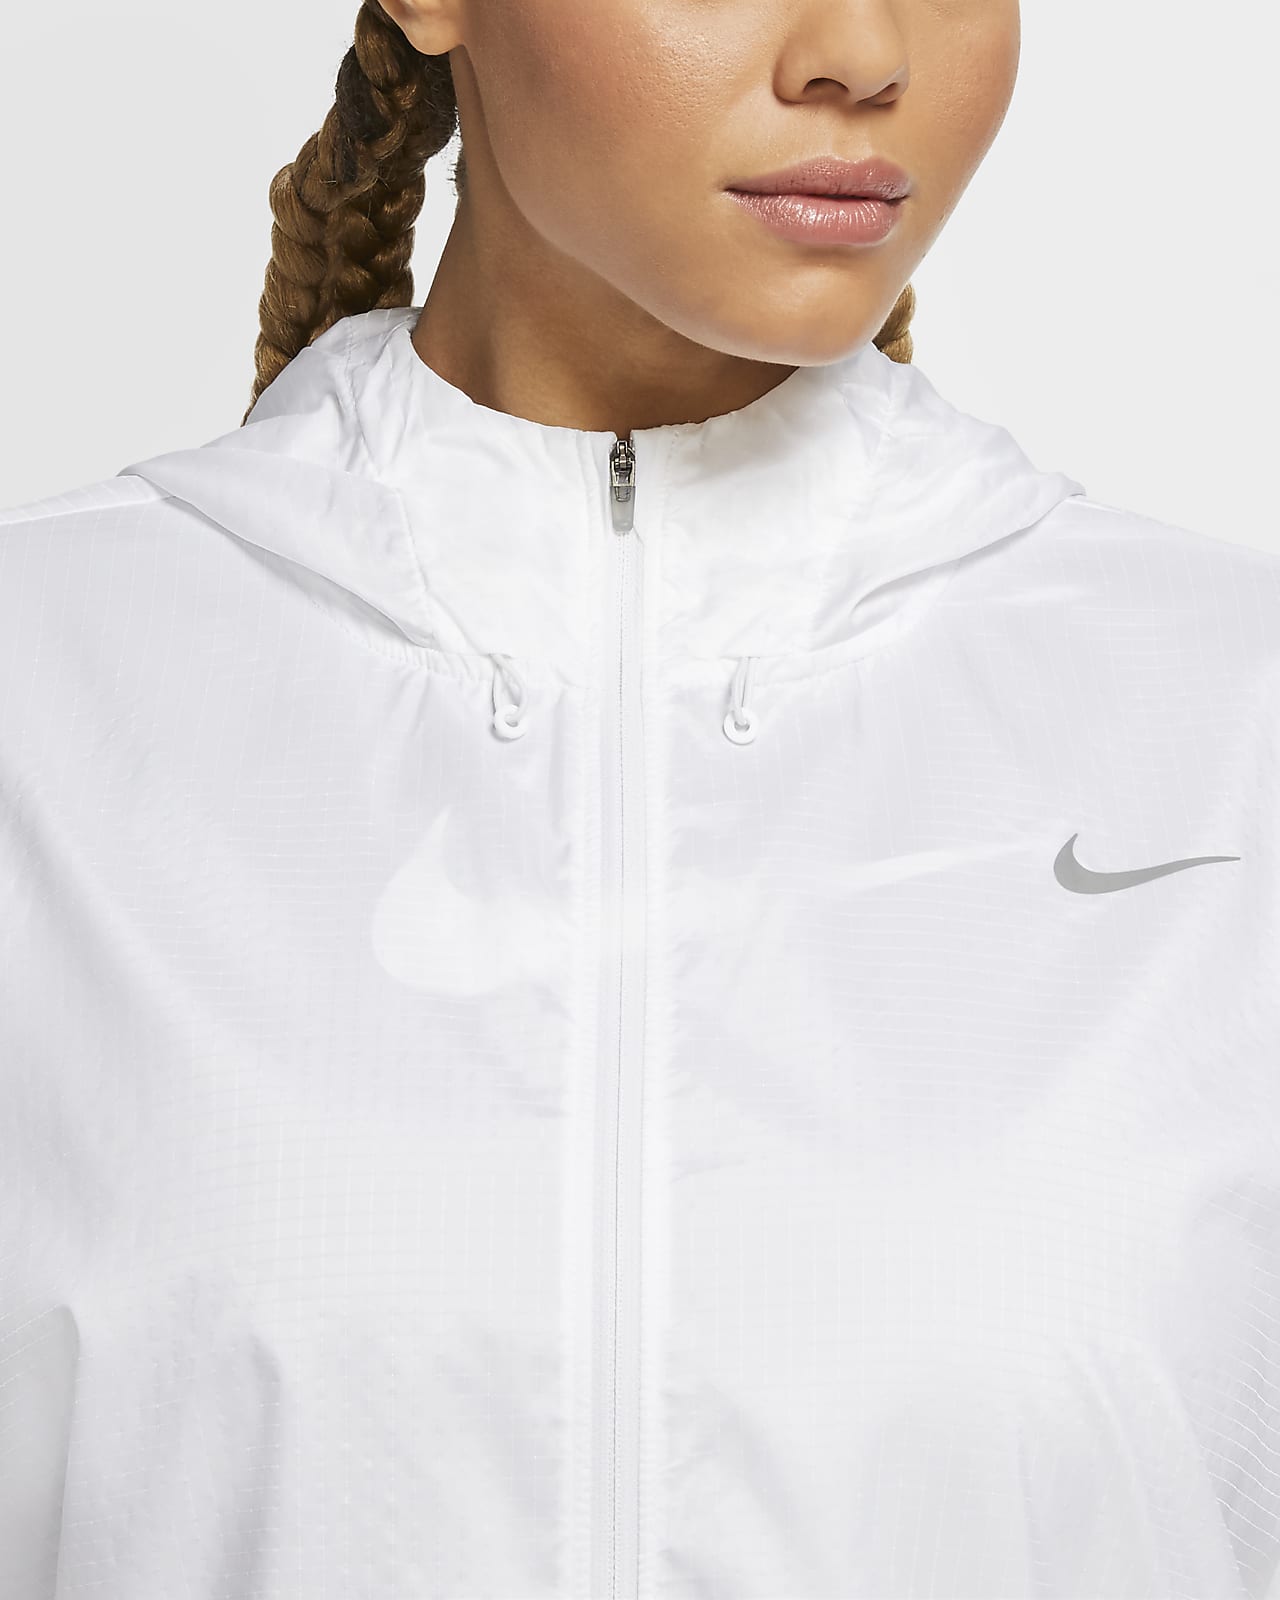 Nike Essential Women's Running Jacket (Plus Size). Nike.com